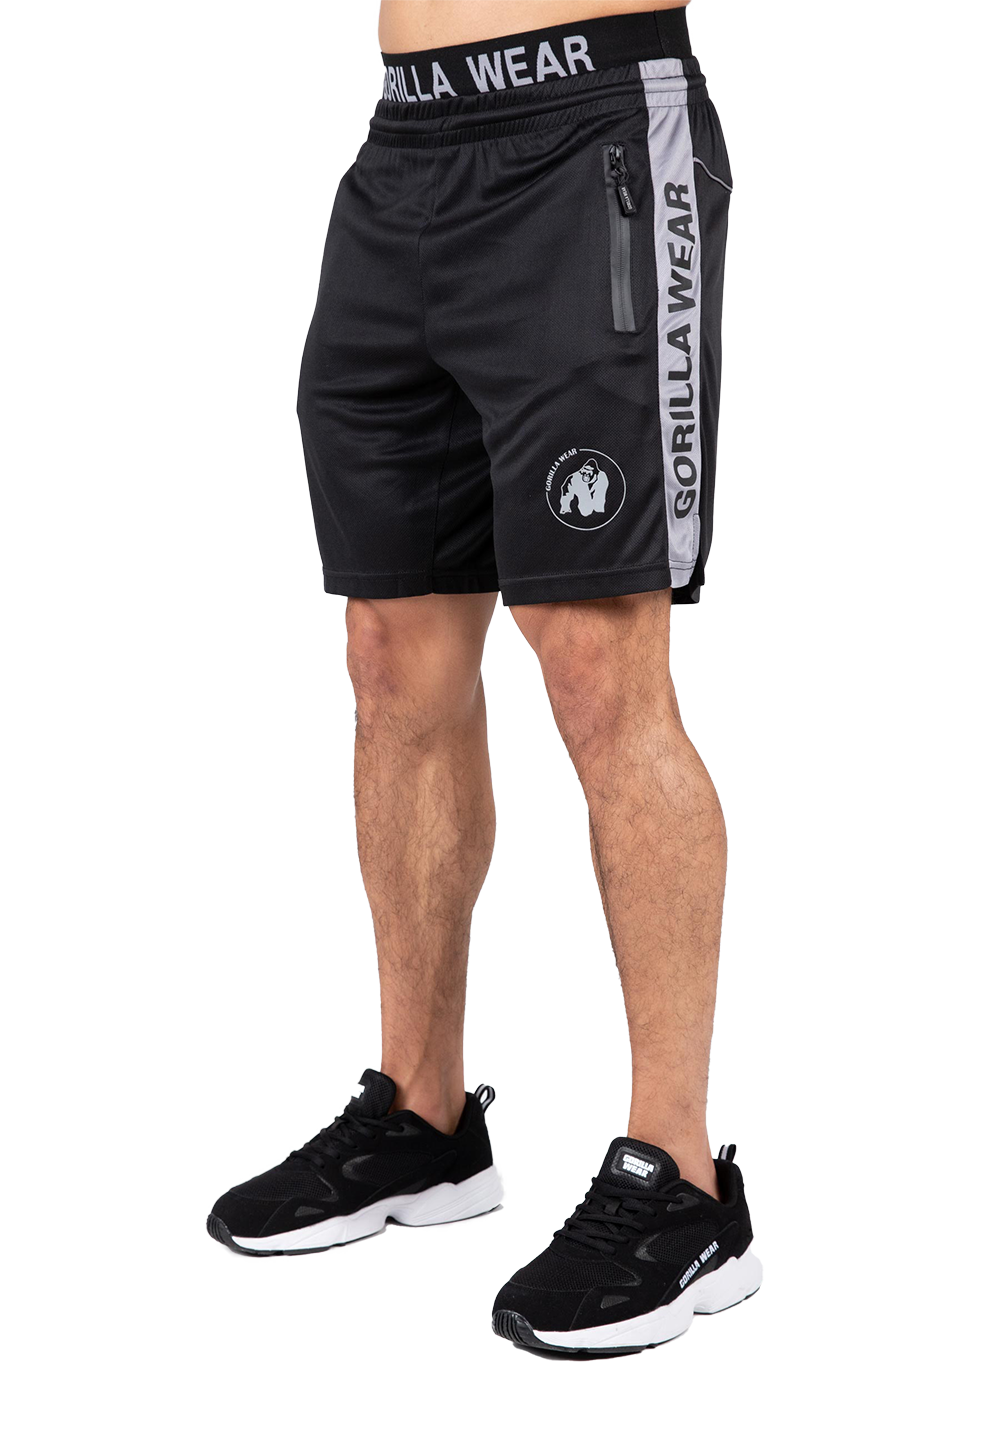 Шорты Atlanta Shorts – Black/Gray от Gorilla Wear